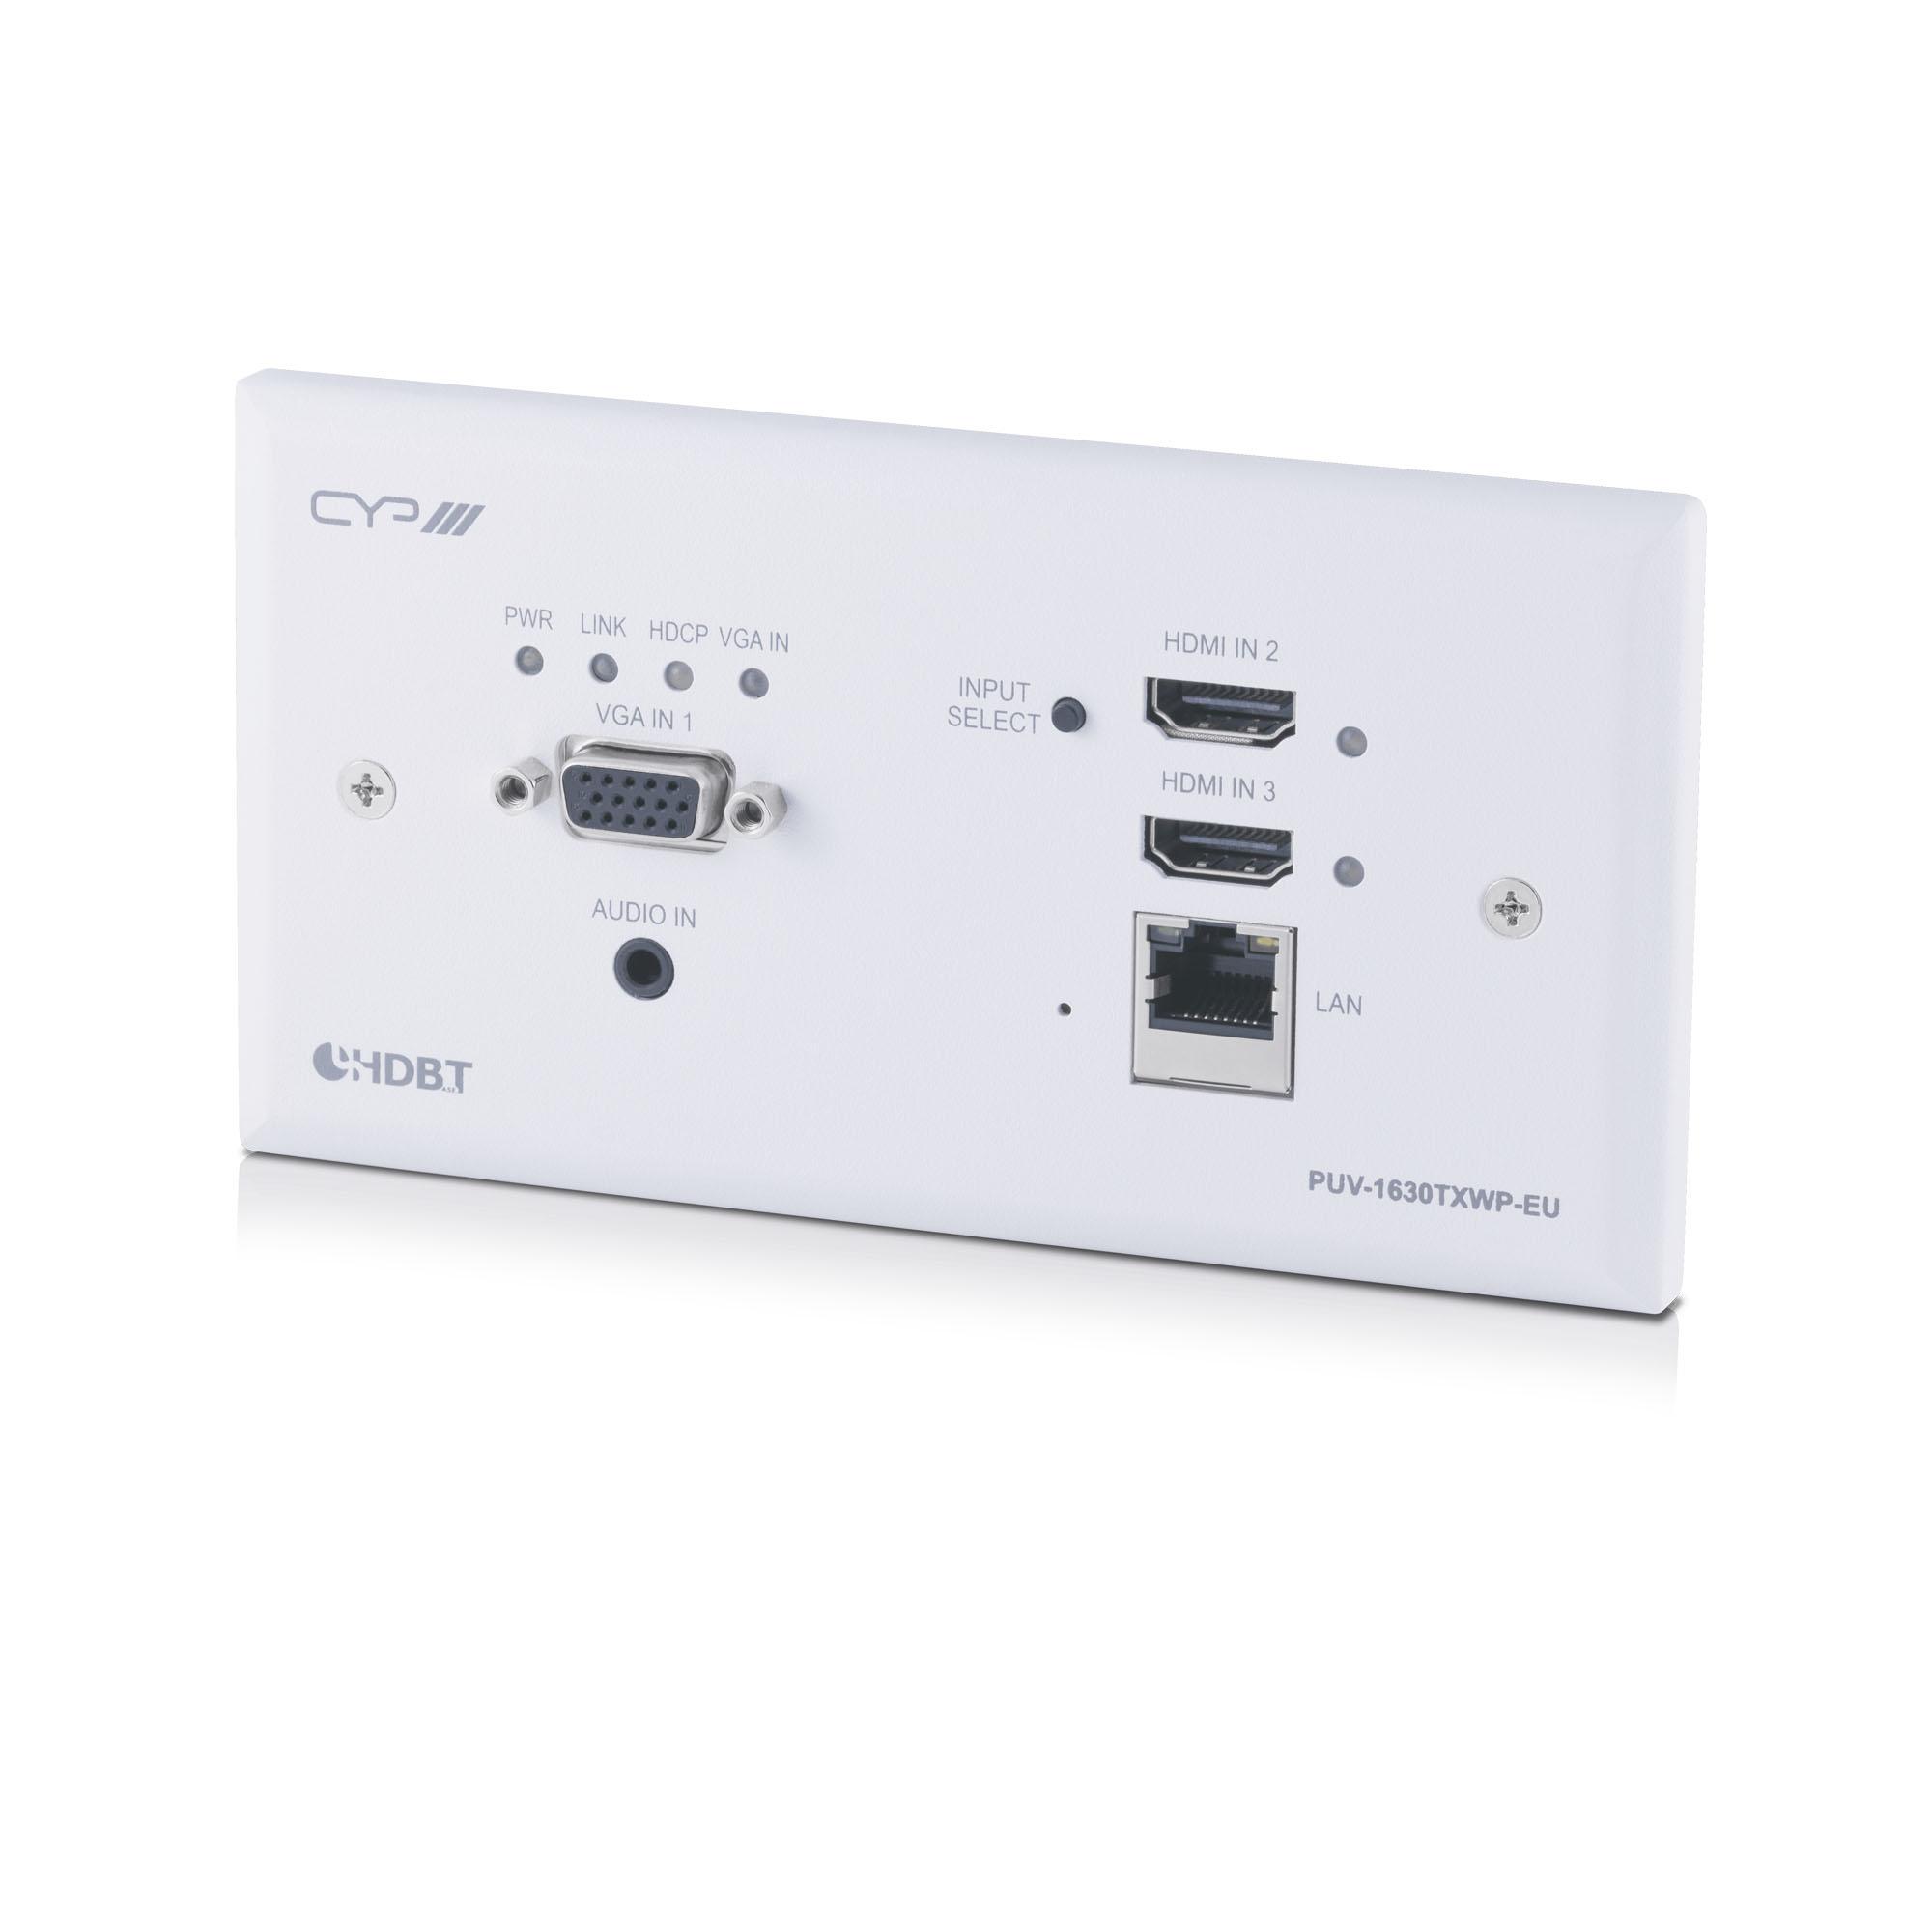 PUV-1630TXWP-EU HDBaseT EU Wallplate Transmitter with 2 x HDMI Inputs, 1 x VGA Input & Auto Conversion